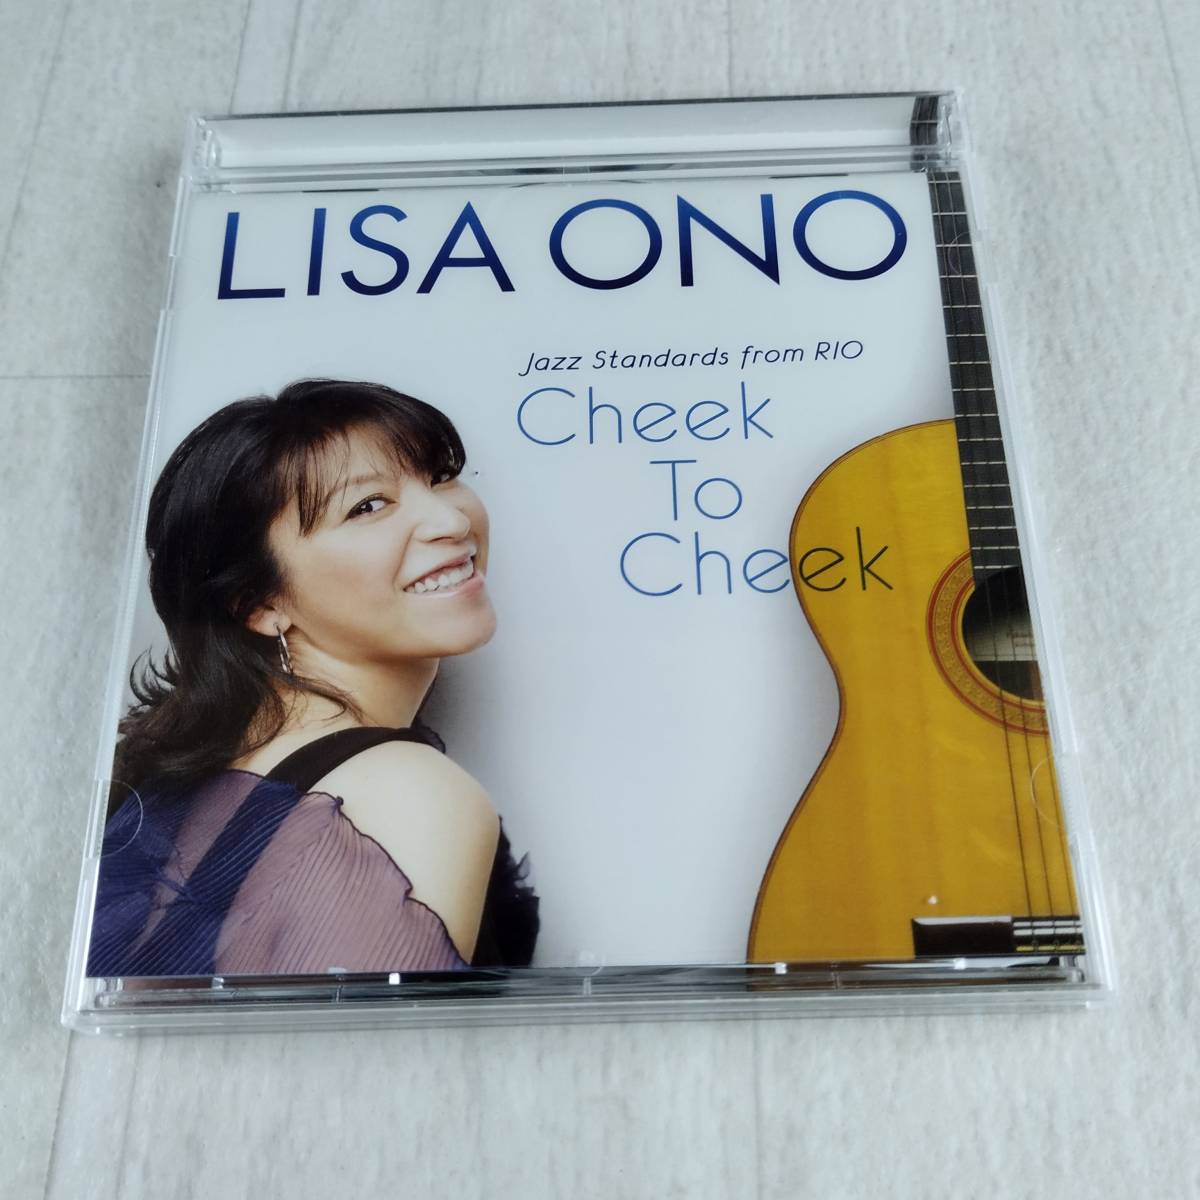 1MC4 CD Ono Lisa Cheek To Cheek Jazz Standards from RIO